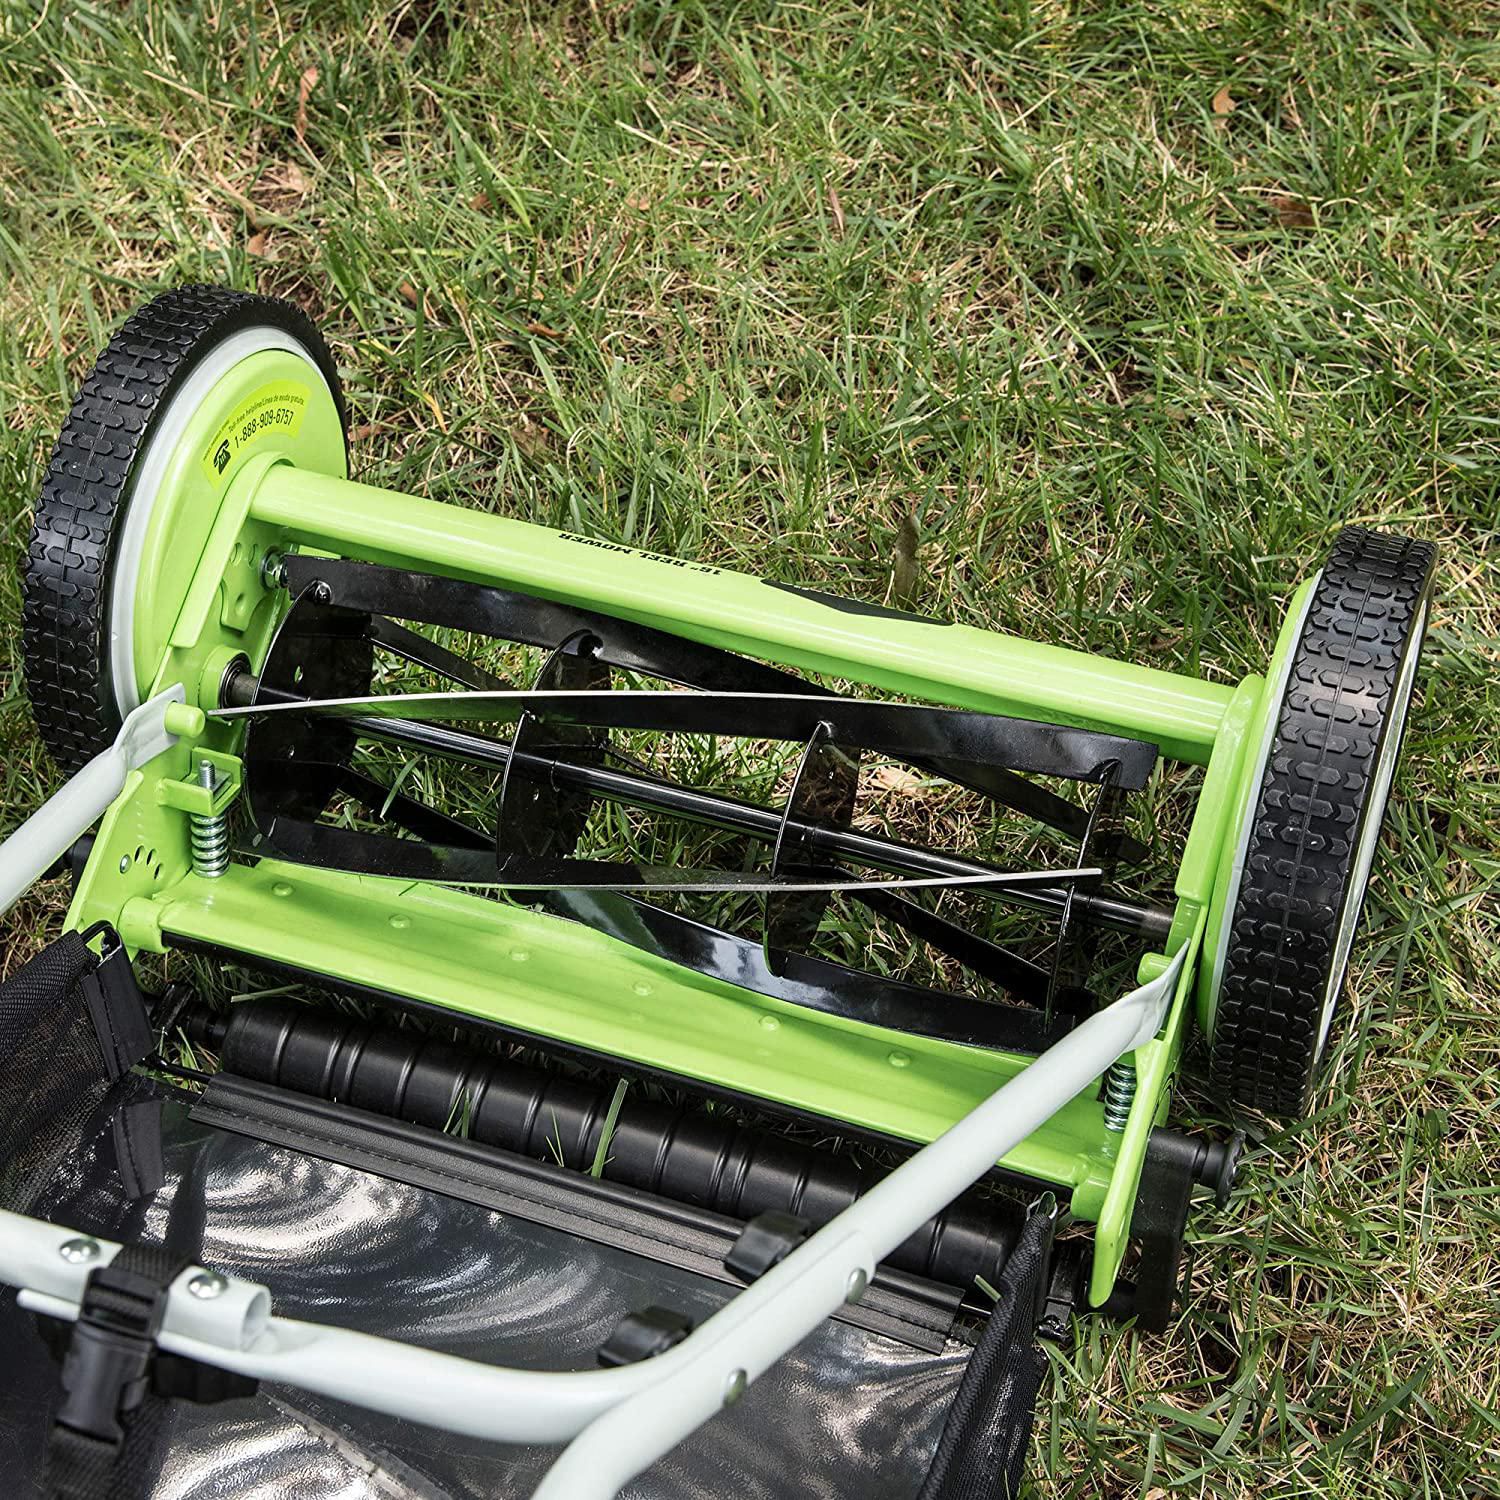 Greenworks 16-inch Reel Mower, Quick, quiet and easy maintenance 